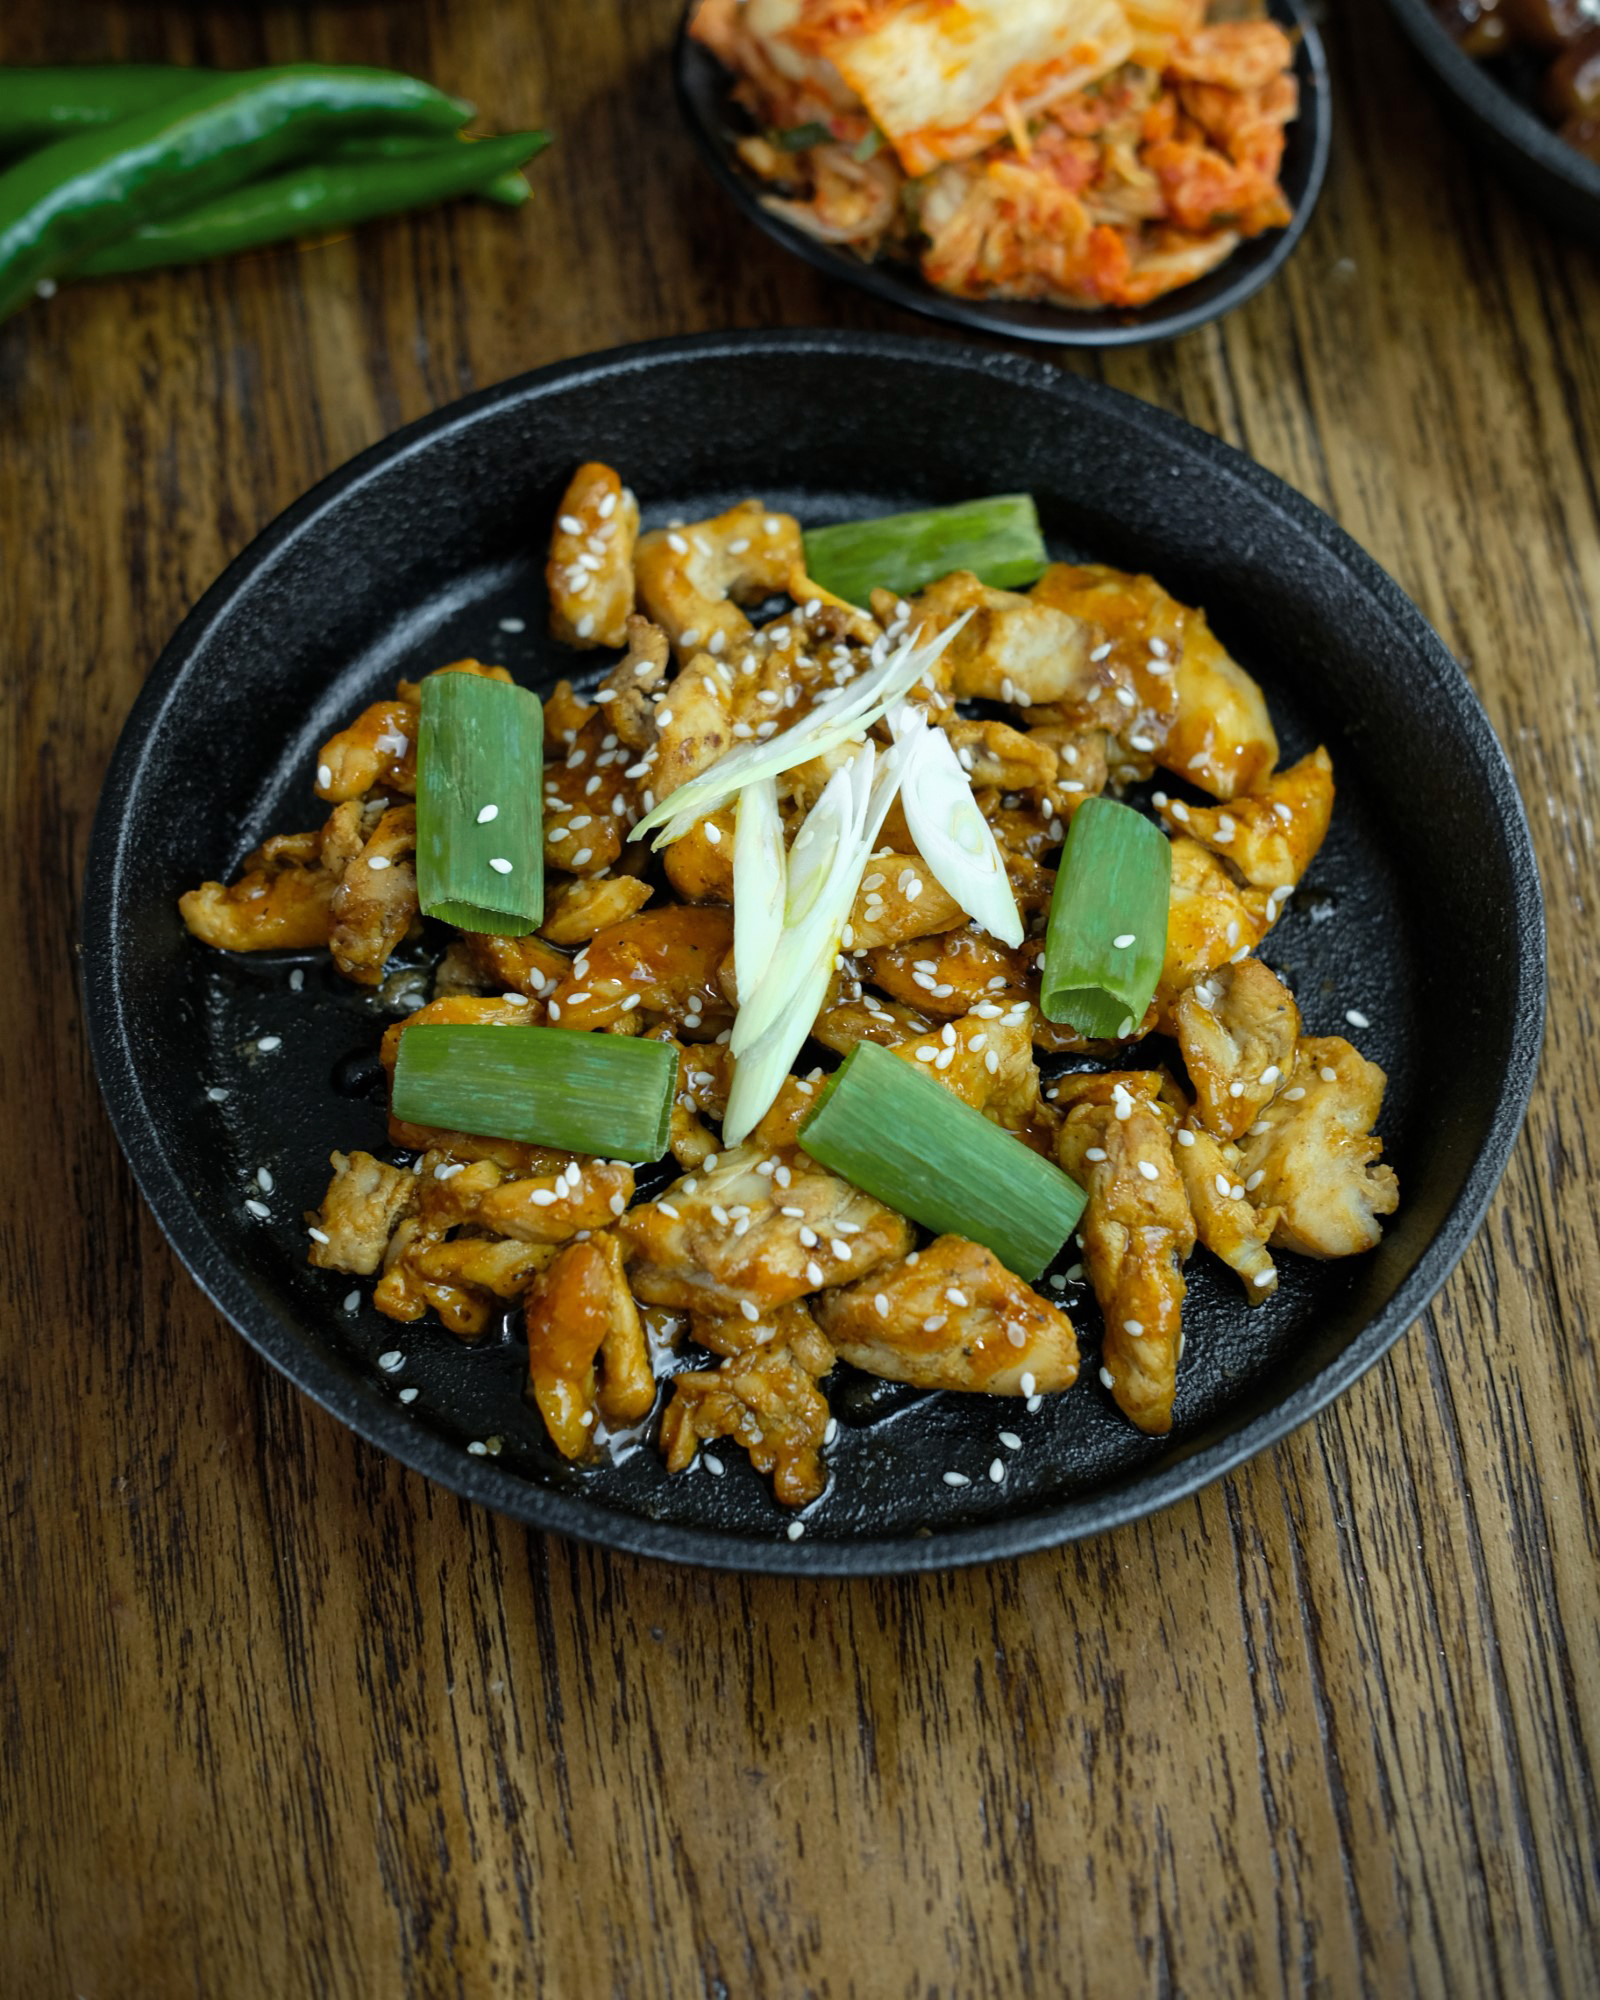 Busan Grill Pan + Food 2_Edit